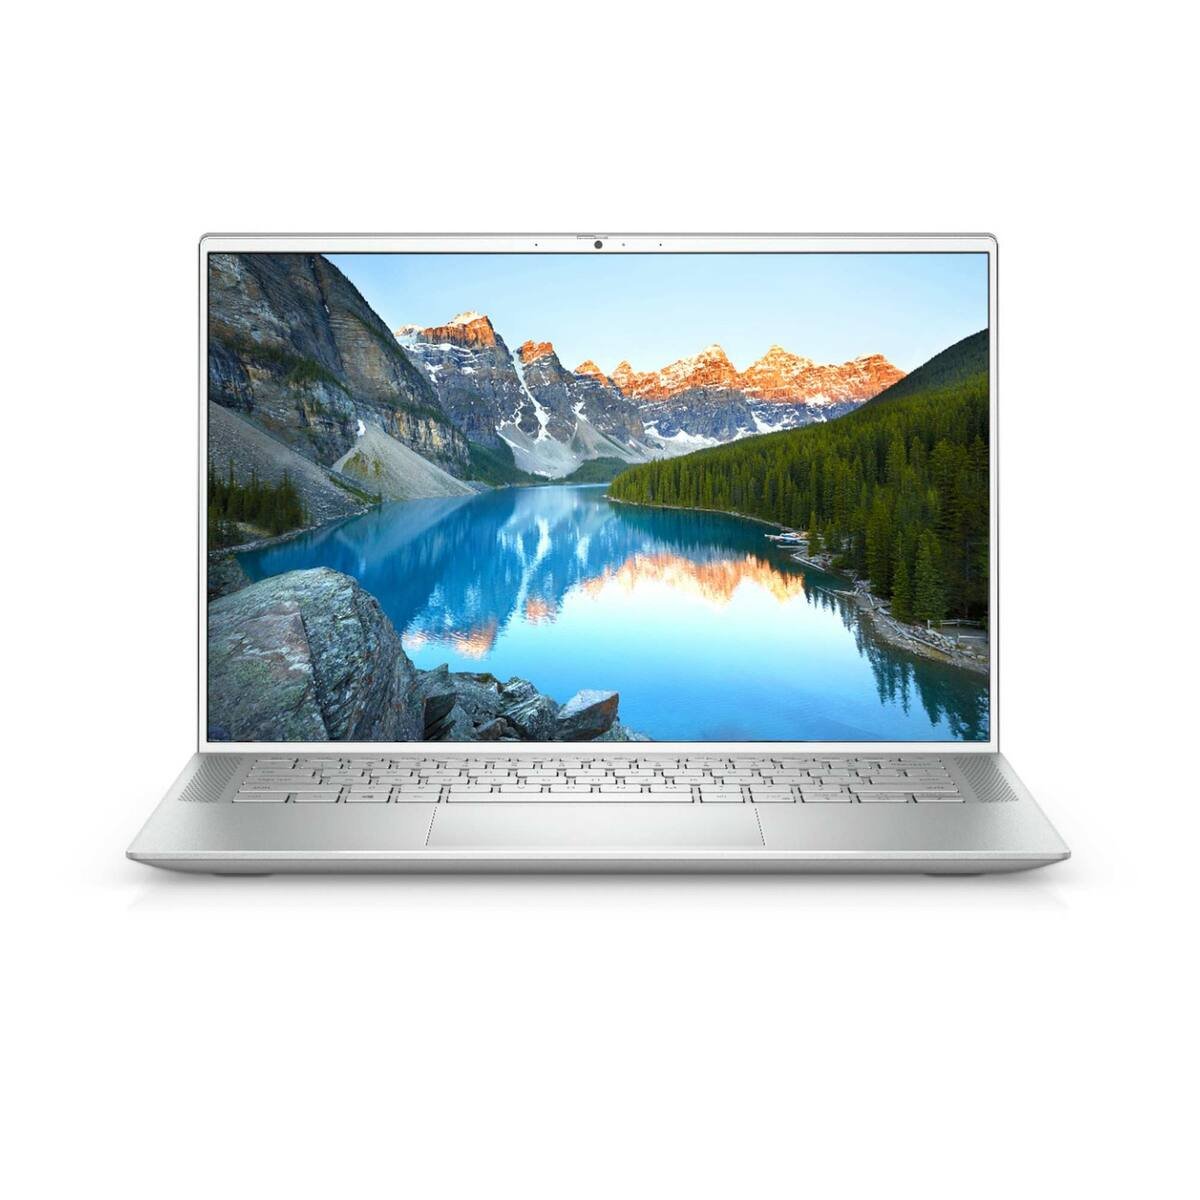 Dell Inspiron 7400 (7400-INS-0120-SLV) Laptop, Intel Core i5-1135G7, 8GB RAM, 512GB SSD, Intel Iris Xe Shared Graphics, 14.5" QHD Display, Windows 10, Silver